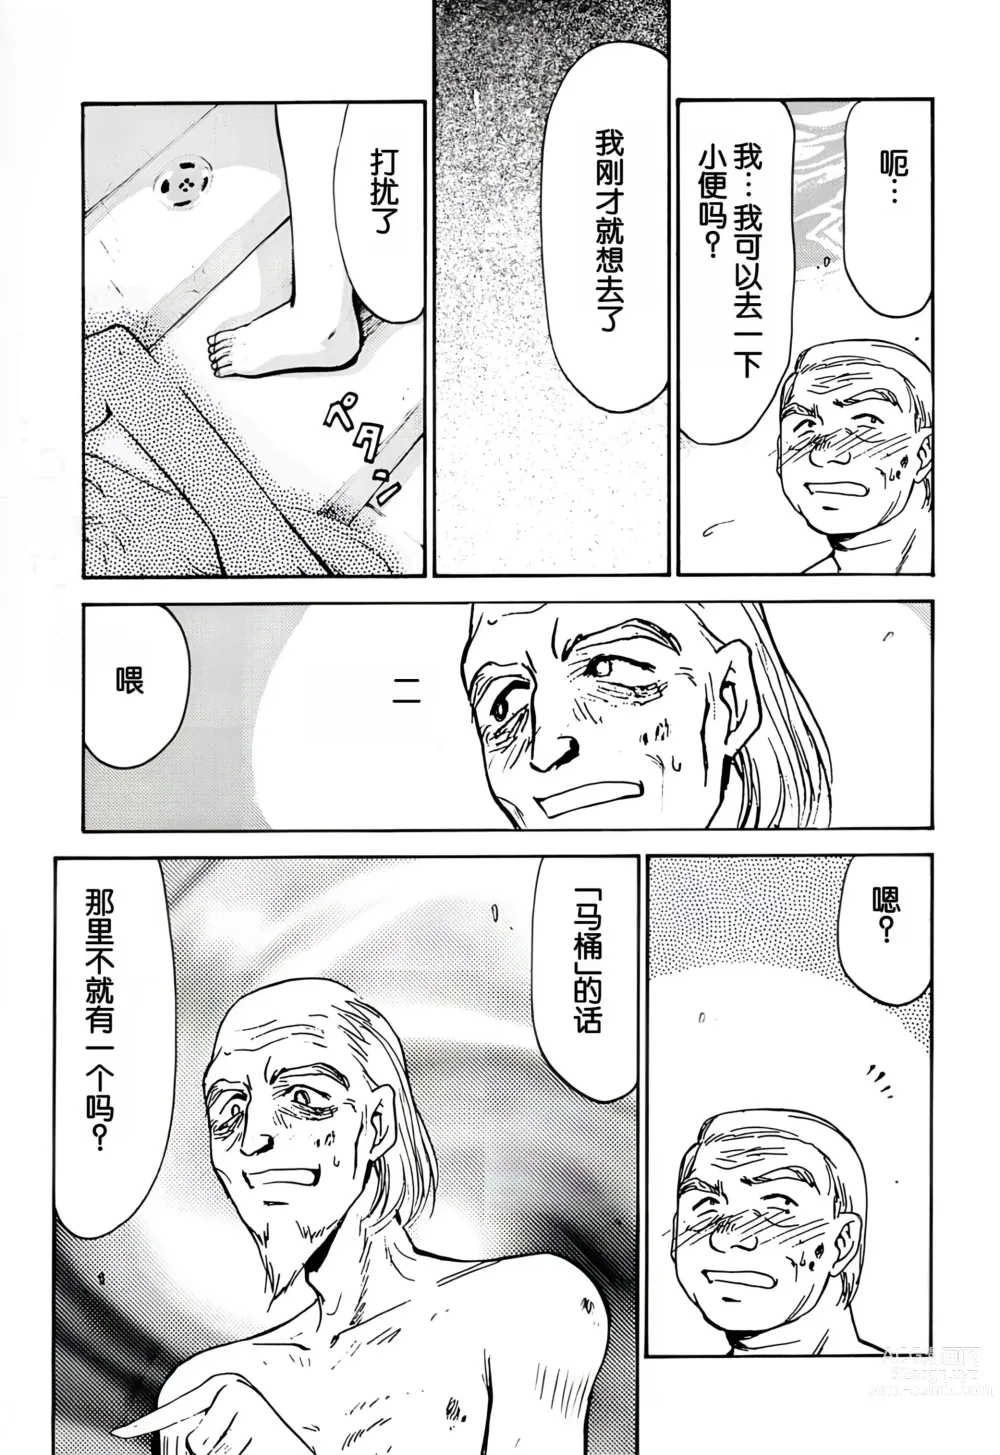 Page 81 of doujinshi Nise DRAGON BLOOD! 2.